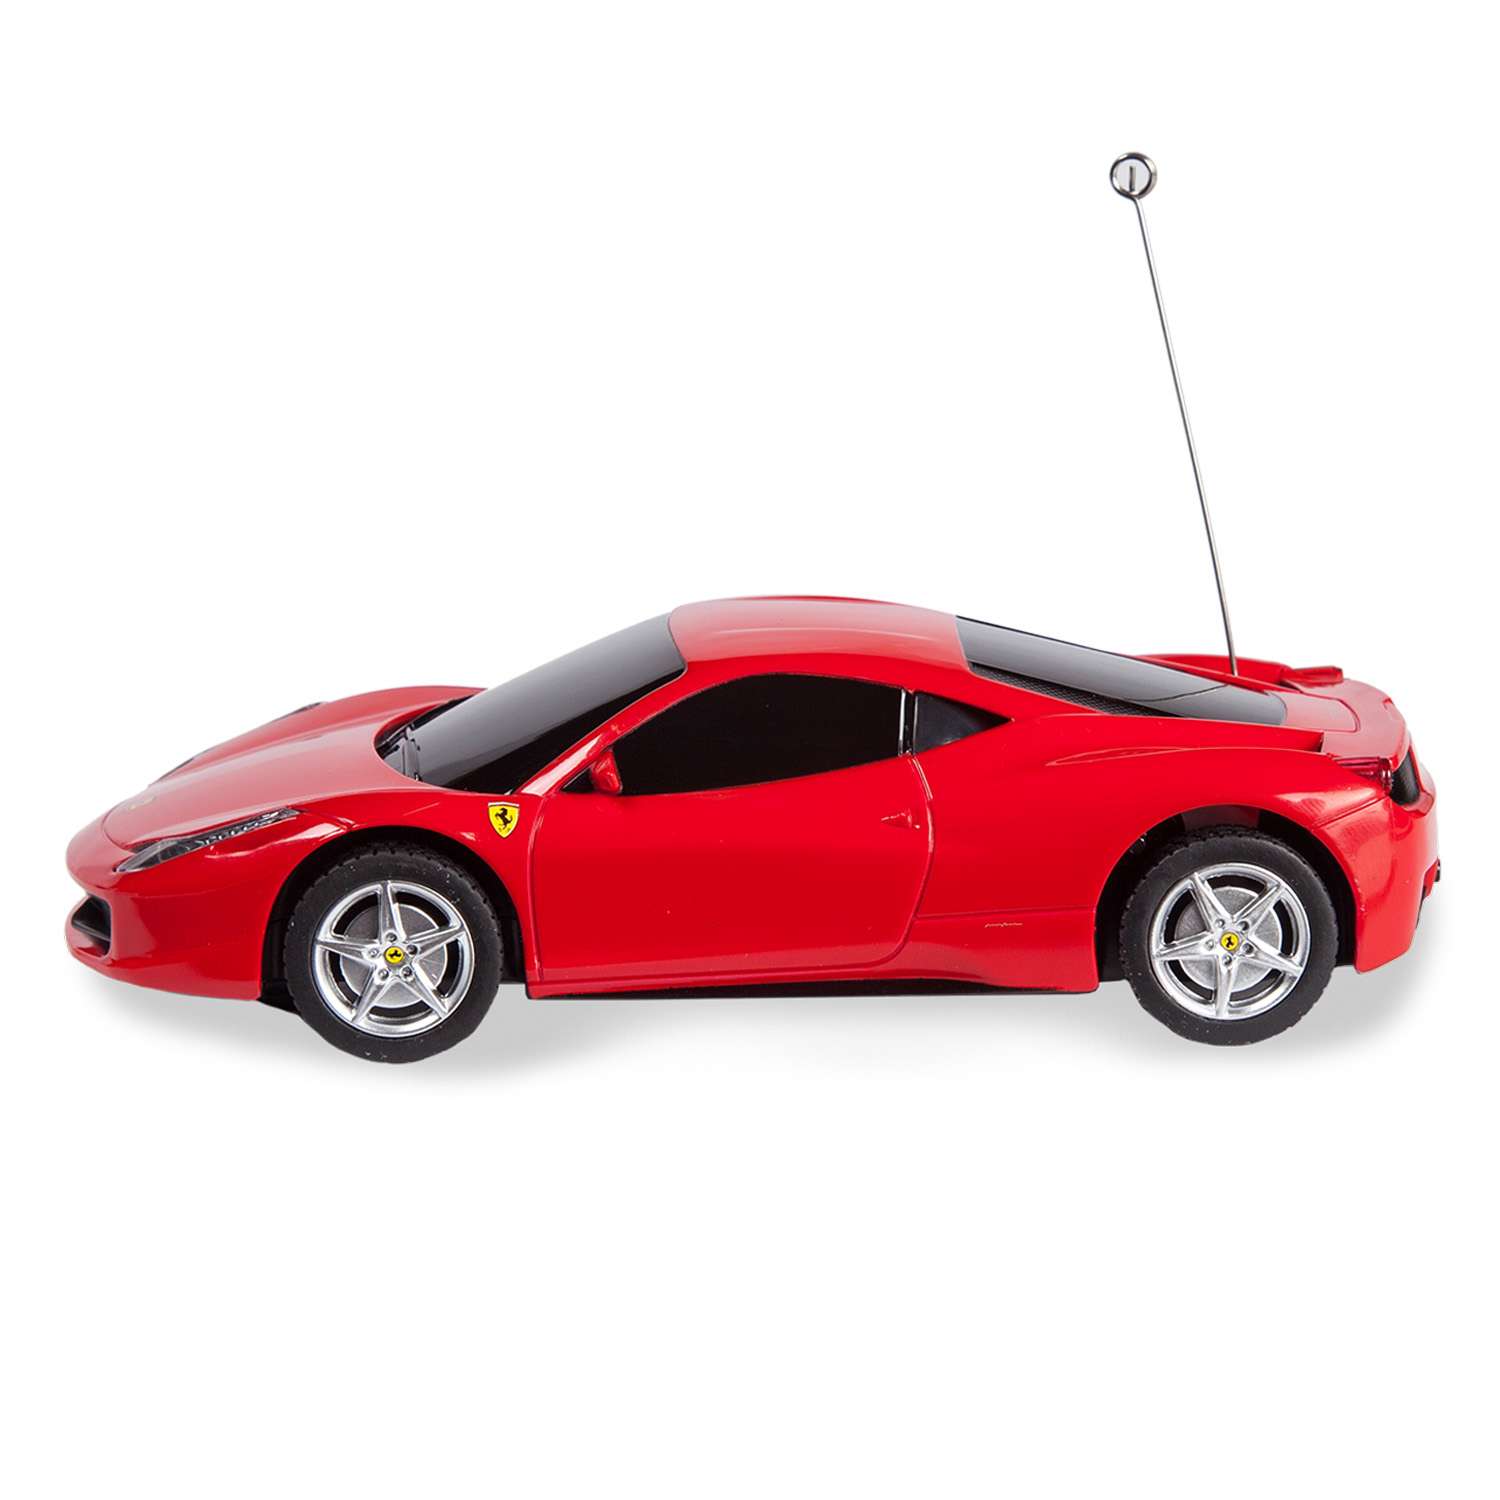 Машинка р/у Rastar Ferrari 458 Italia 1:32 красная - фото 4